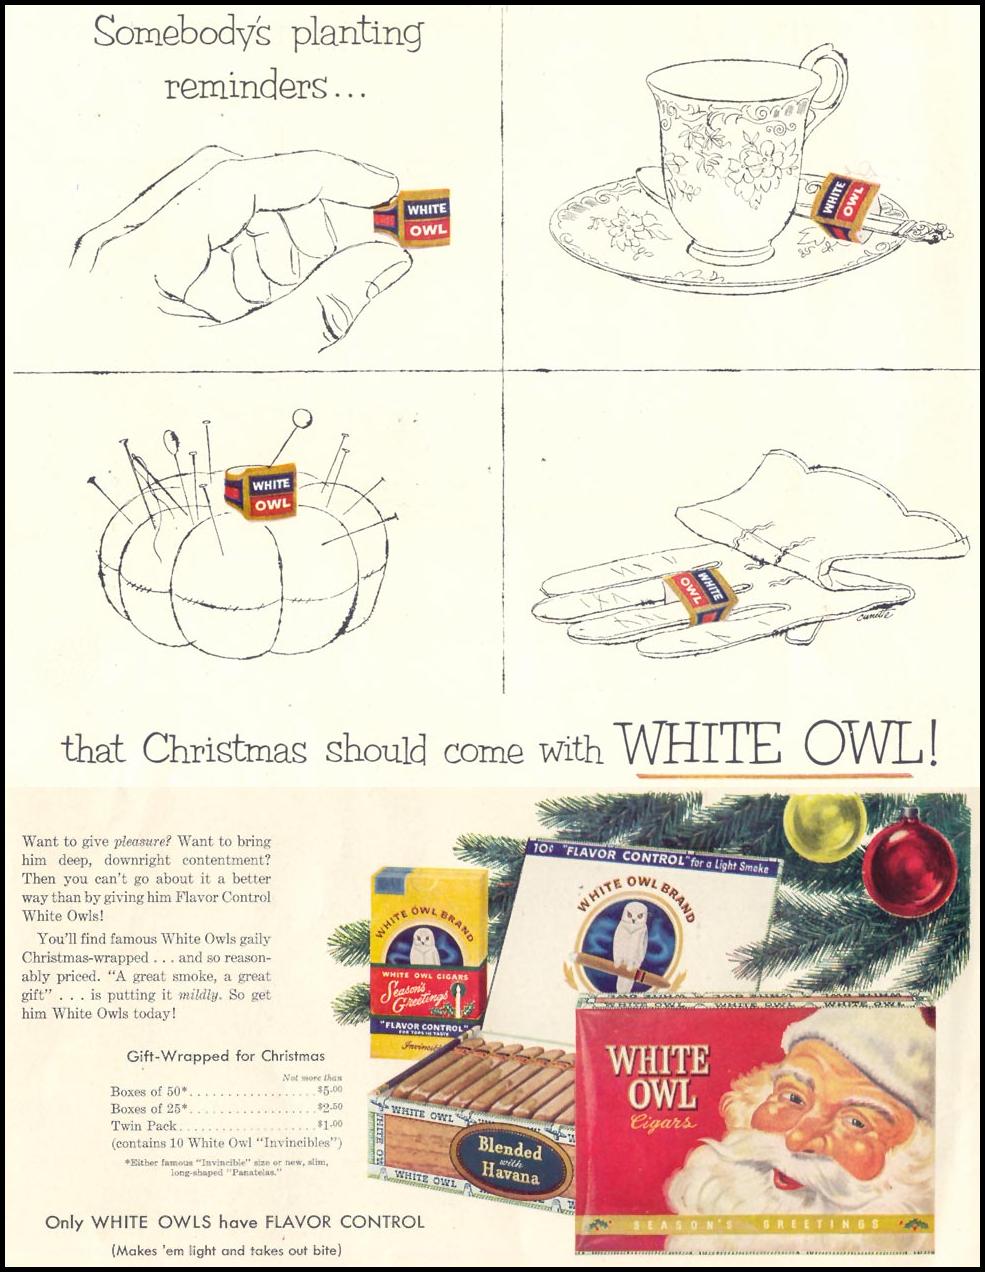 WHITE OWL CIGARS
LIFE
12/24/1951
INSIDE FRONT